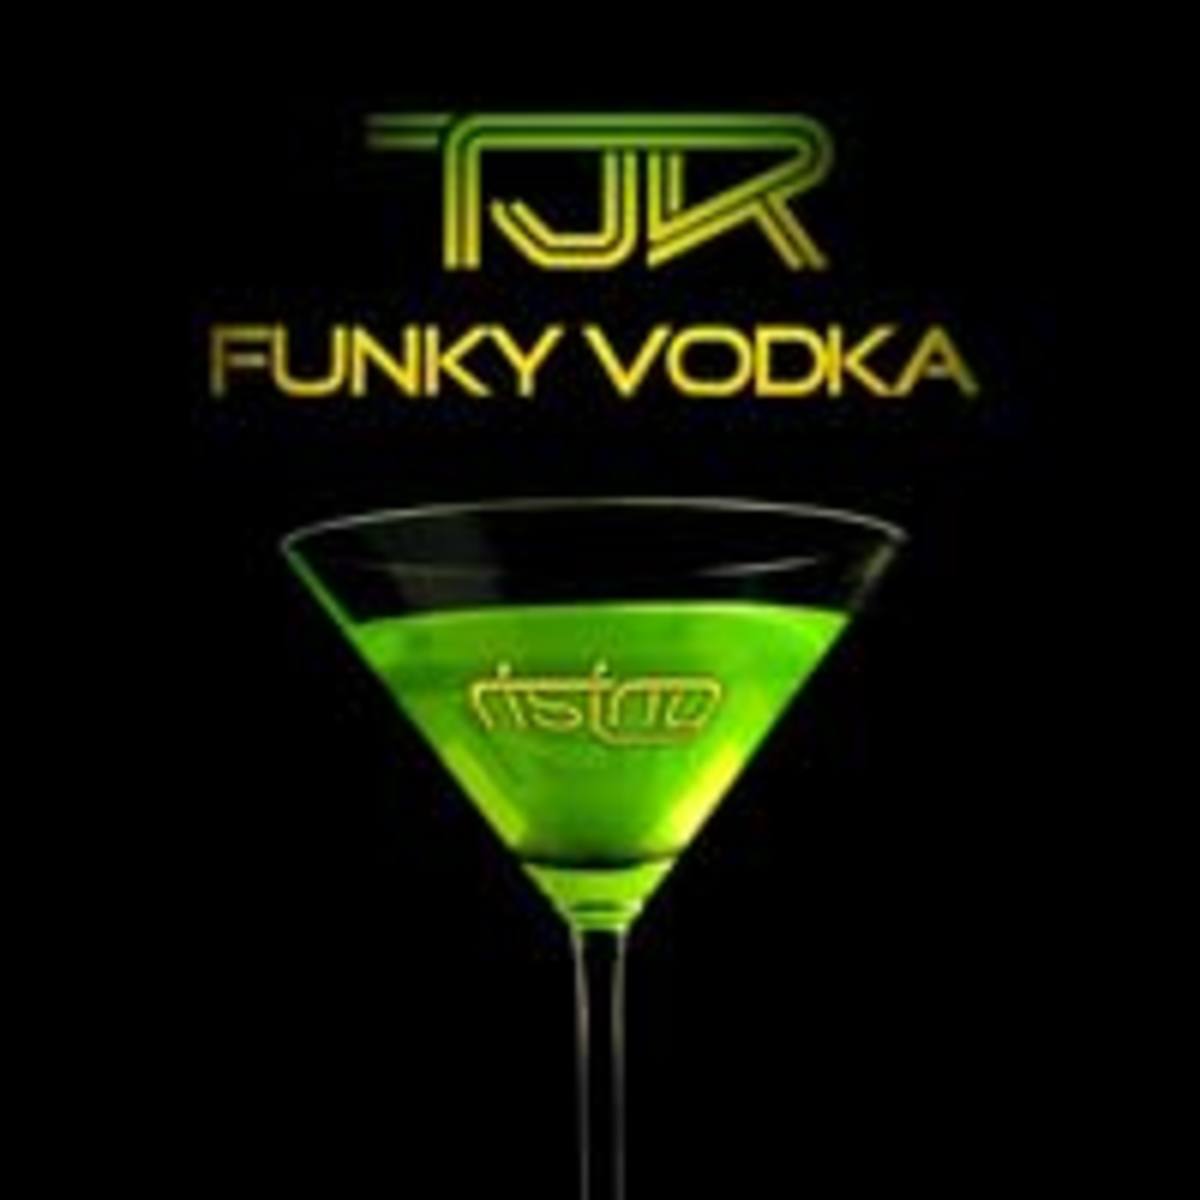 TJR-Funky-Vodka-Rising-Music